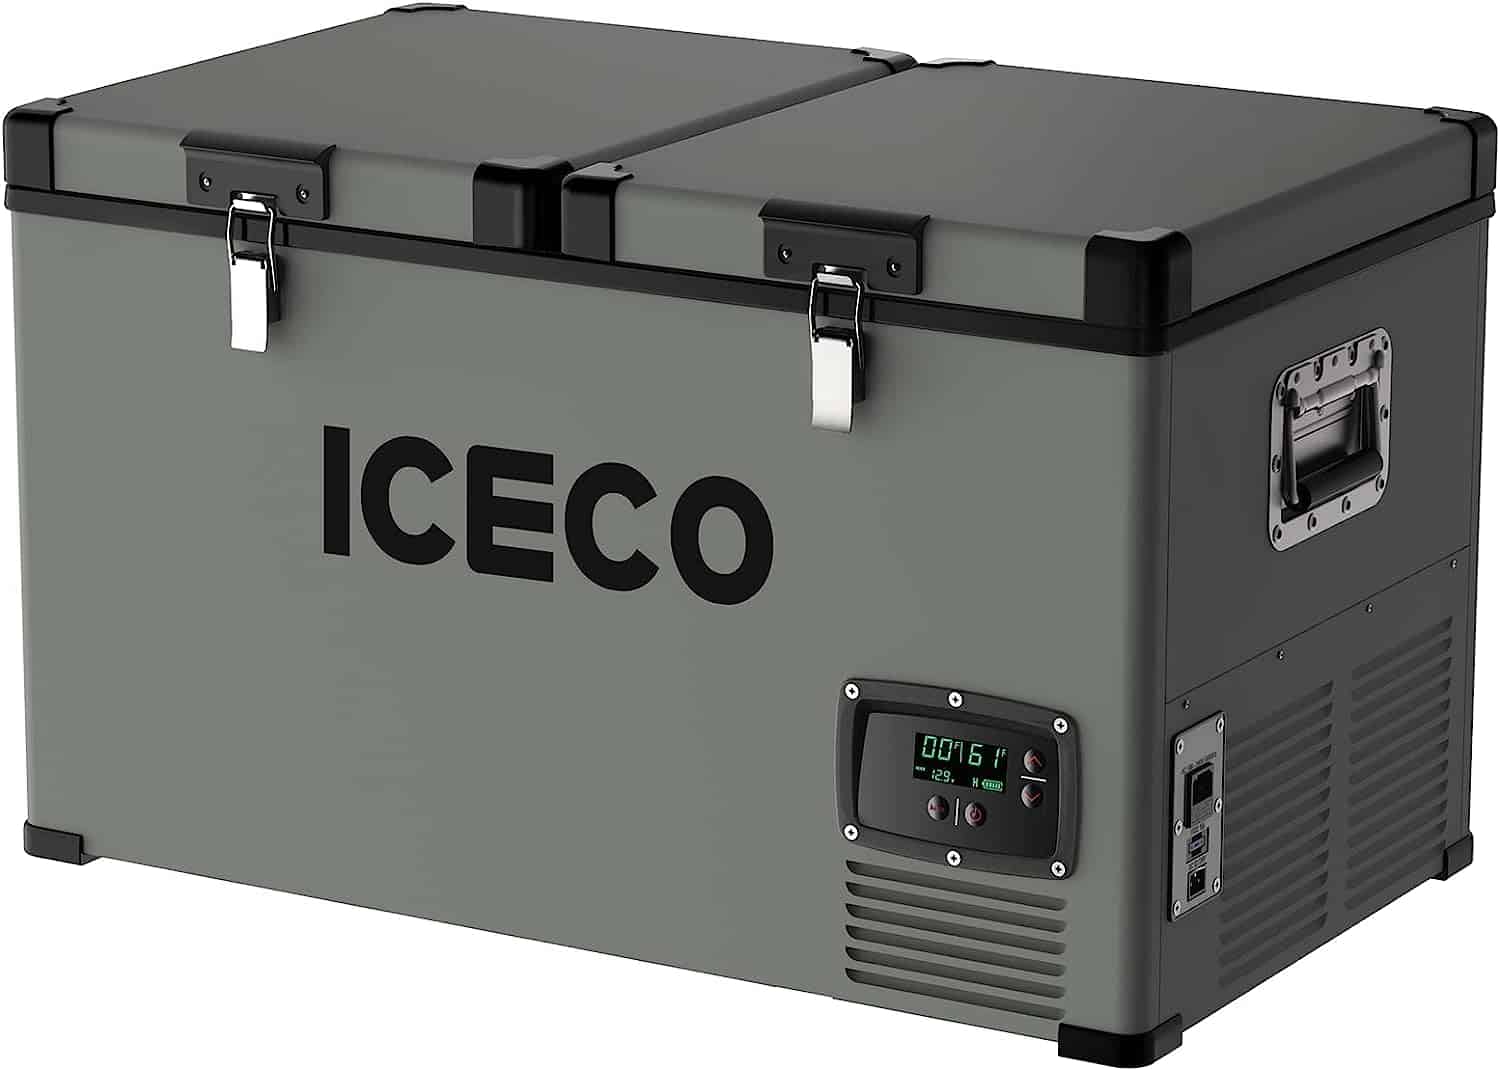 ICECO VL60 Dual-Zone Portable Refrigerator